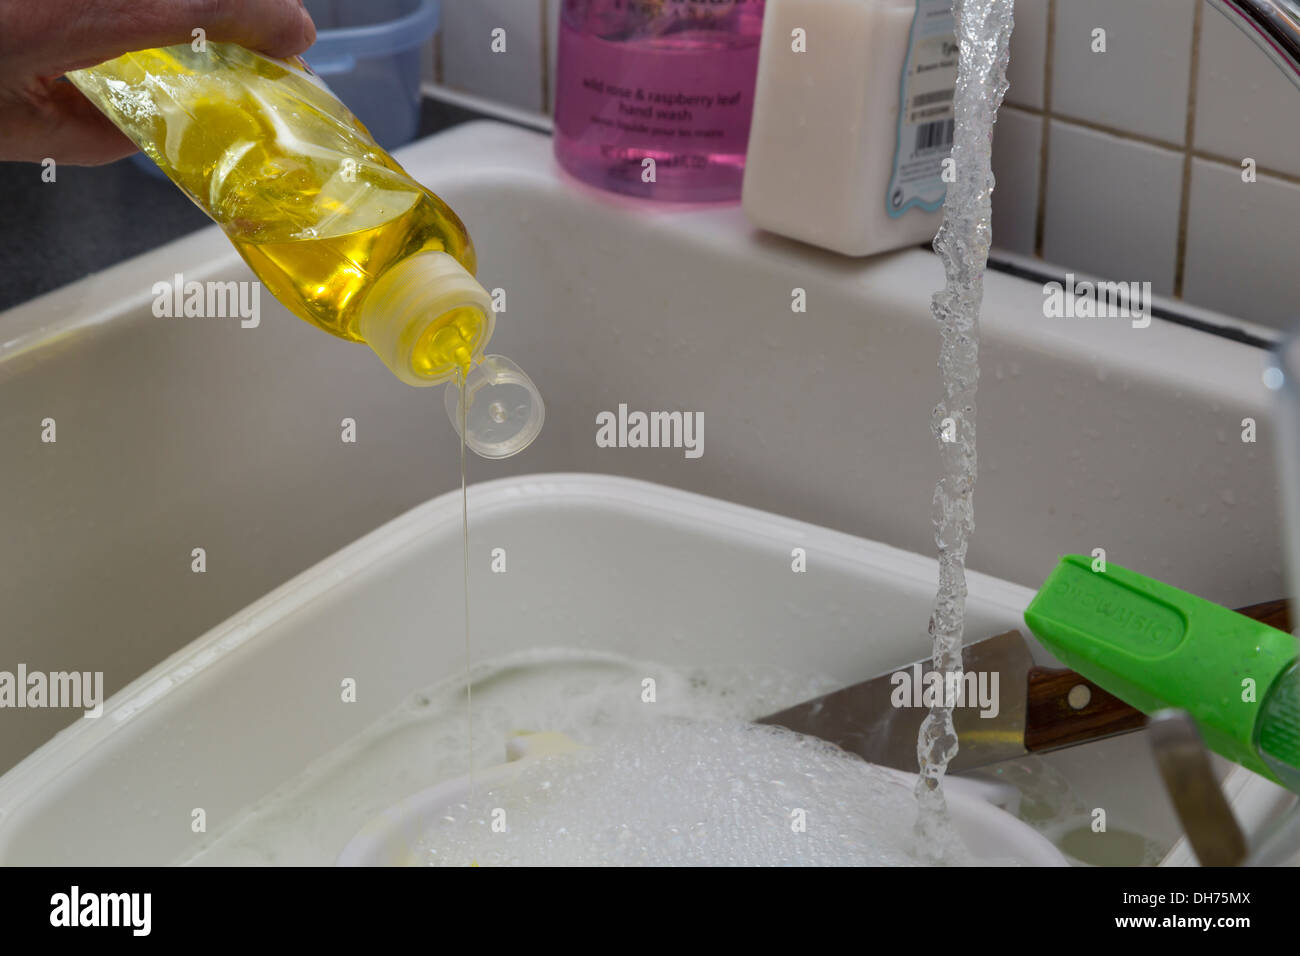 Washing up after preparing food. Stock Photo